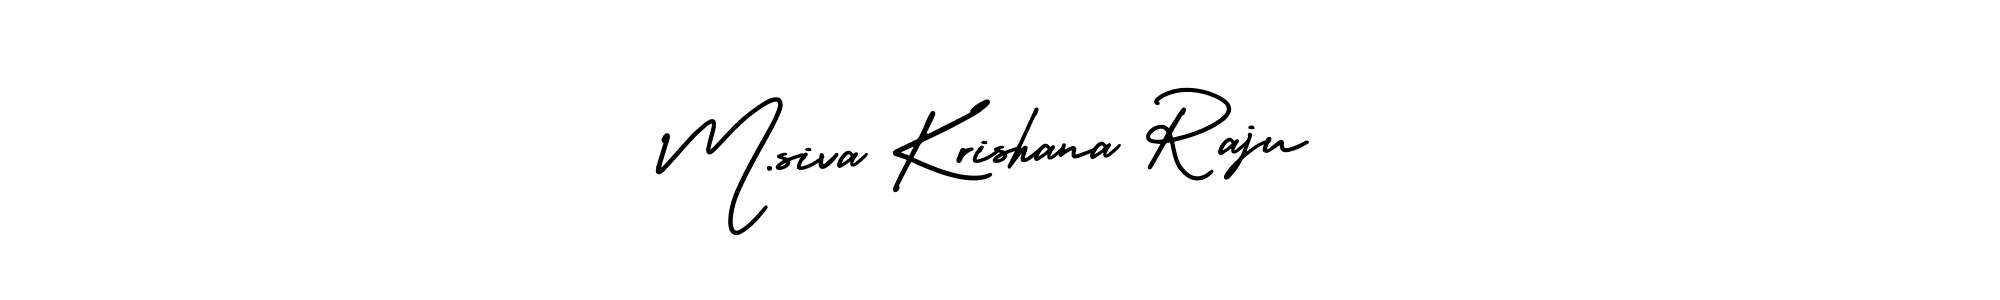 Best and Professional Signature Style for M.siva Krishana Raju. AmerikaSignatureDemo-Regular Best Signature Style Collection. M.siva Krishana Raju signature style 3 images and pictures png